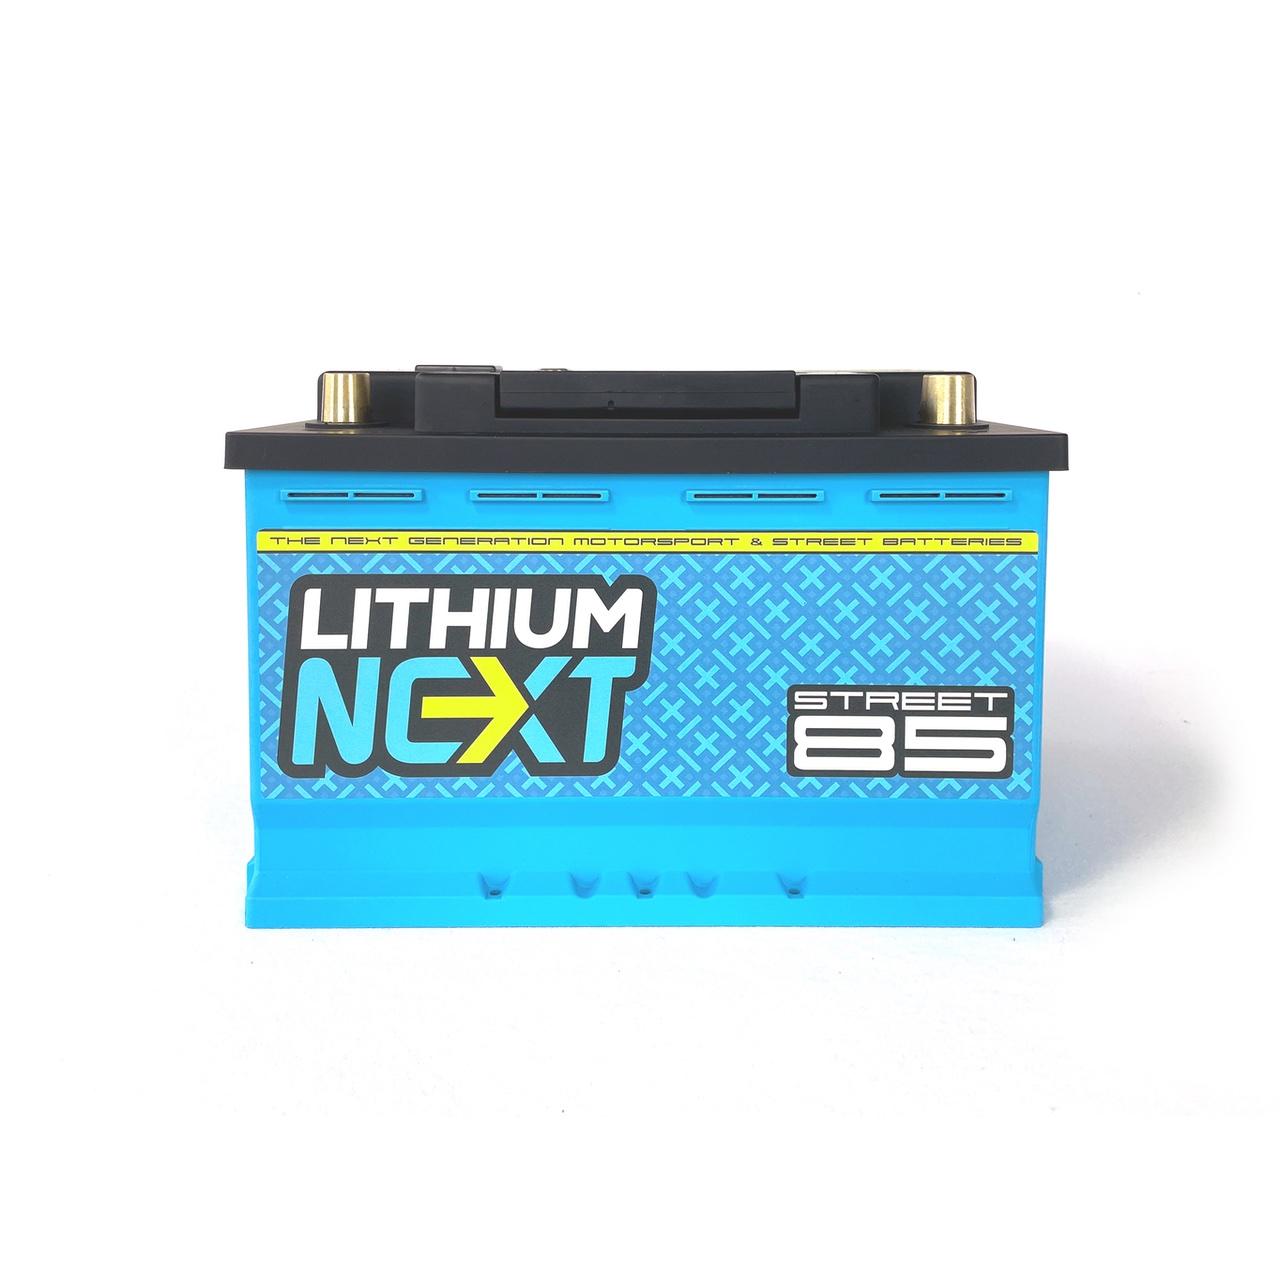 LithiumNEXT STREET85 Starterbatterie Pbeq 85 Ah » Burkhart Engineering